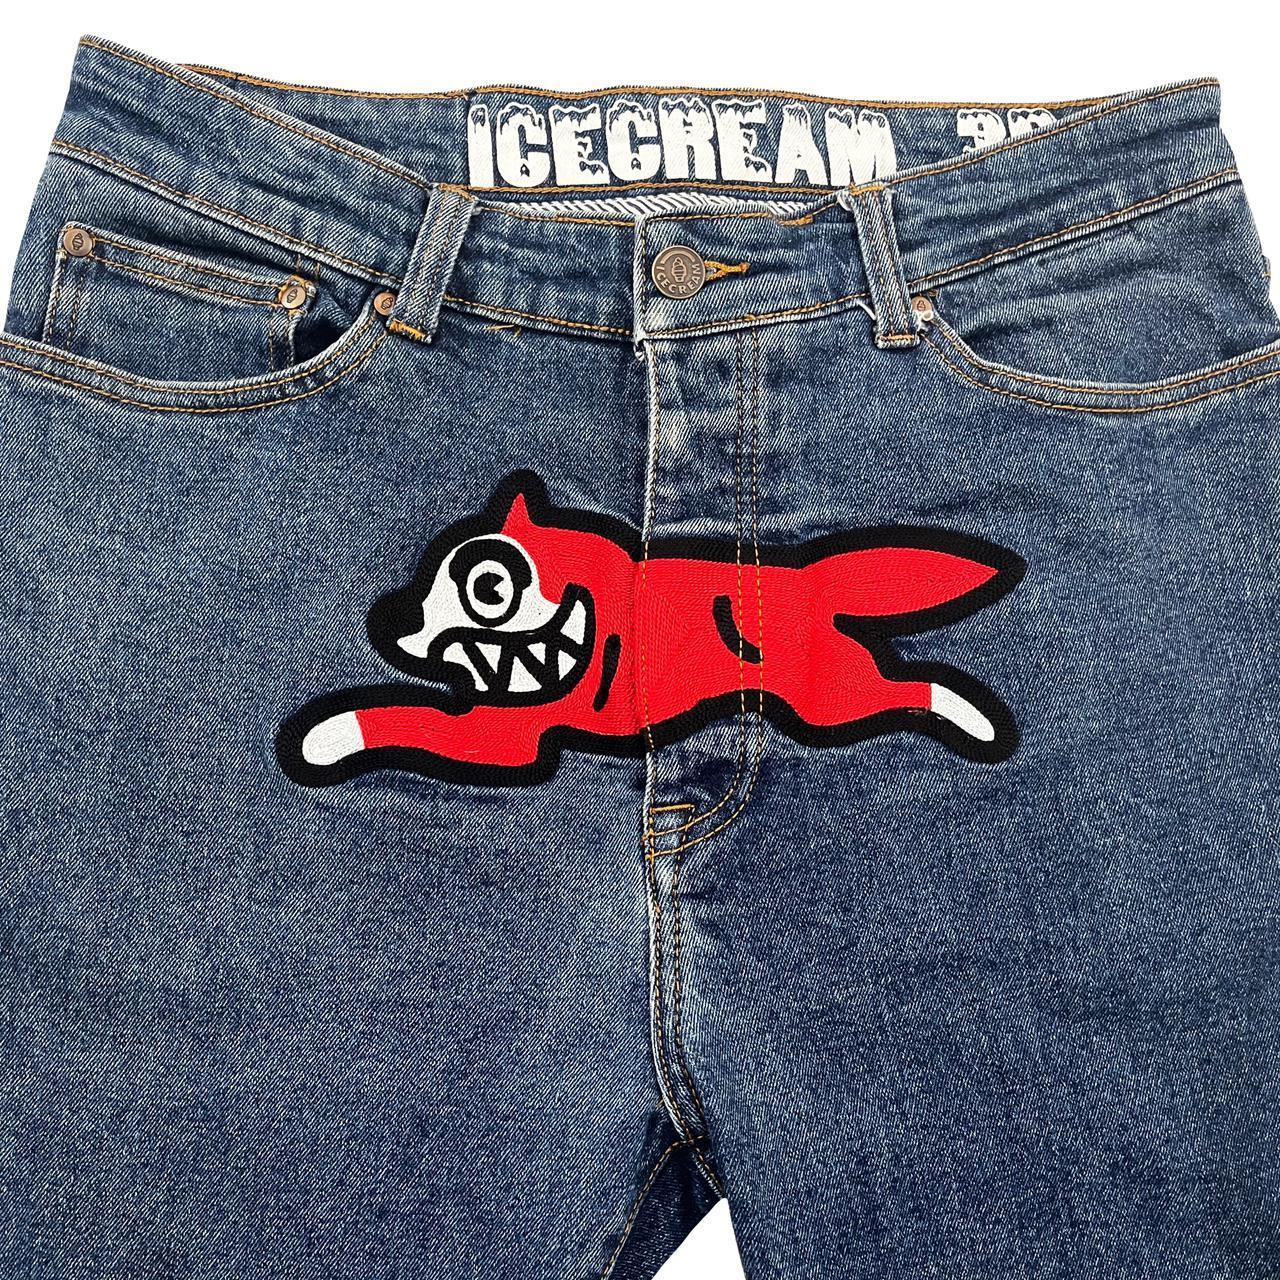 BBC Icecream Club Running Dog Jeans - Known Source